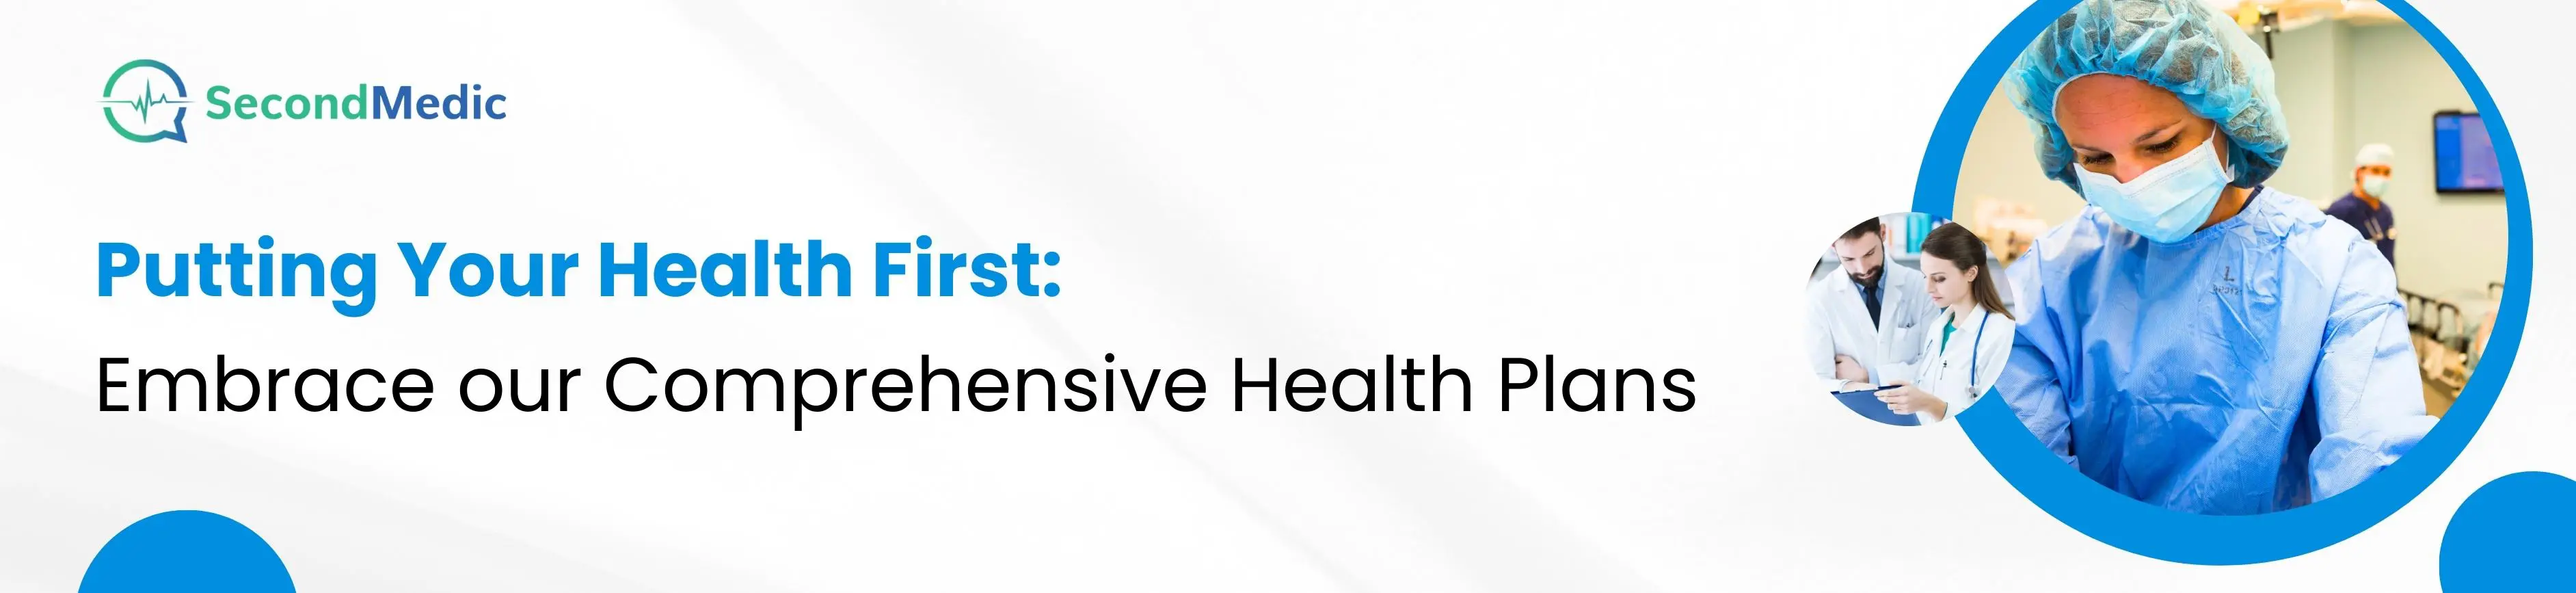 Health Plan Banner